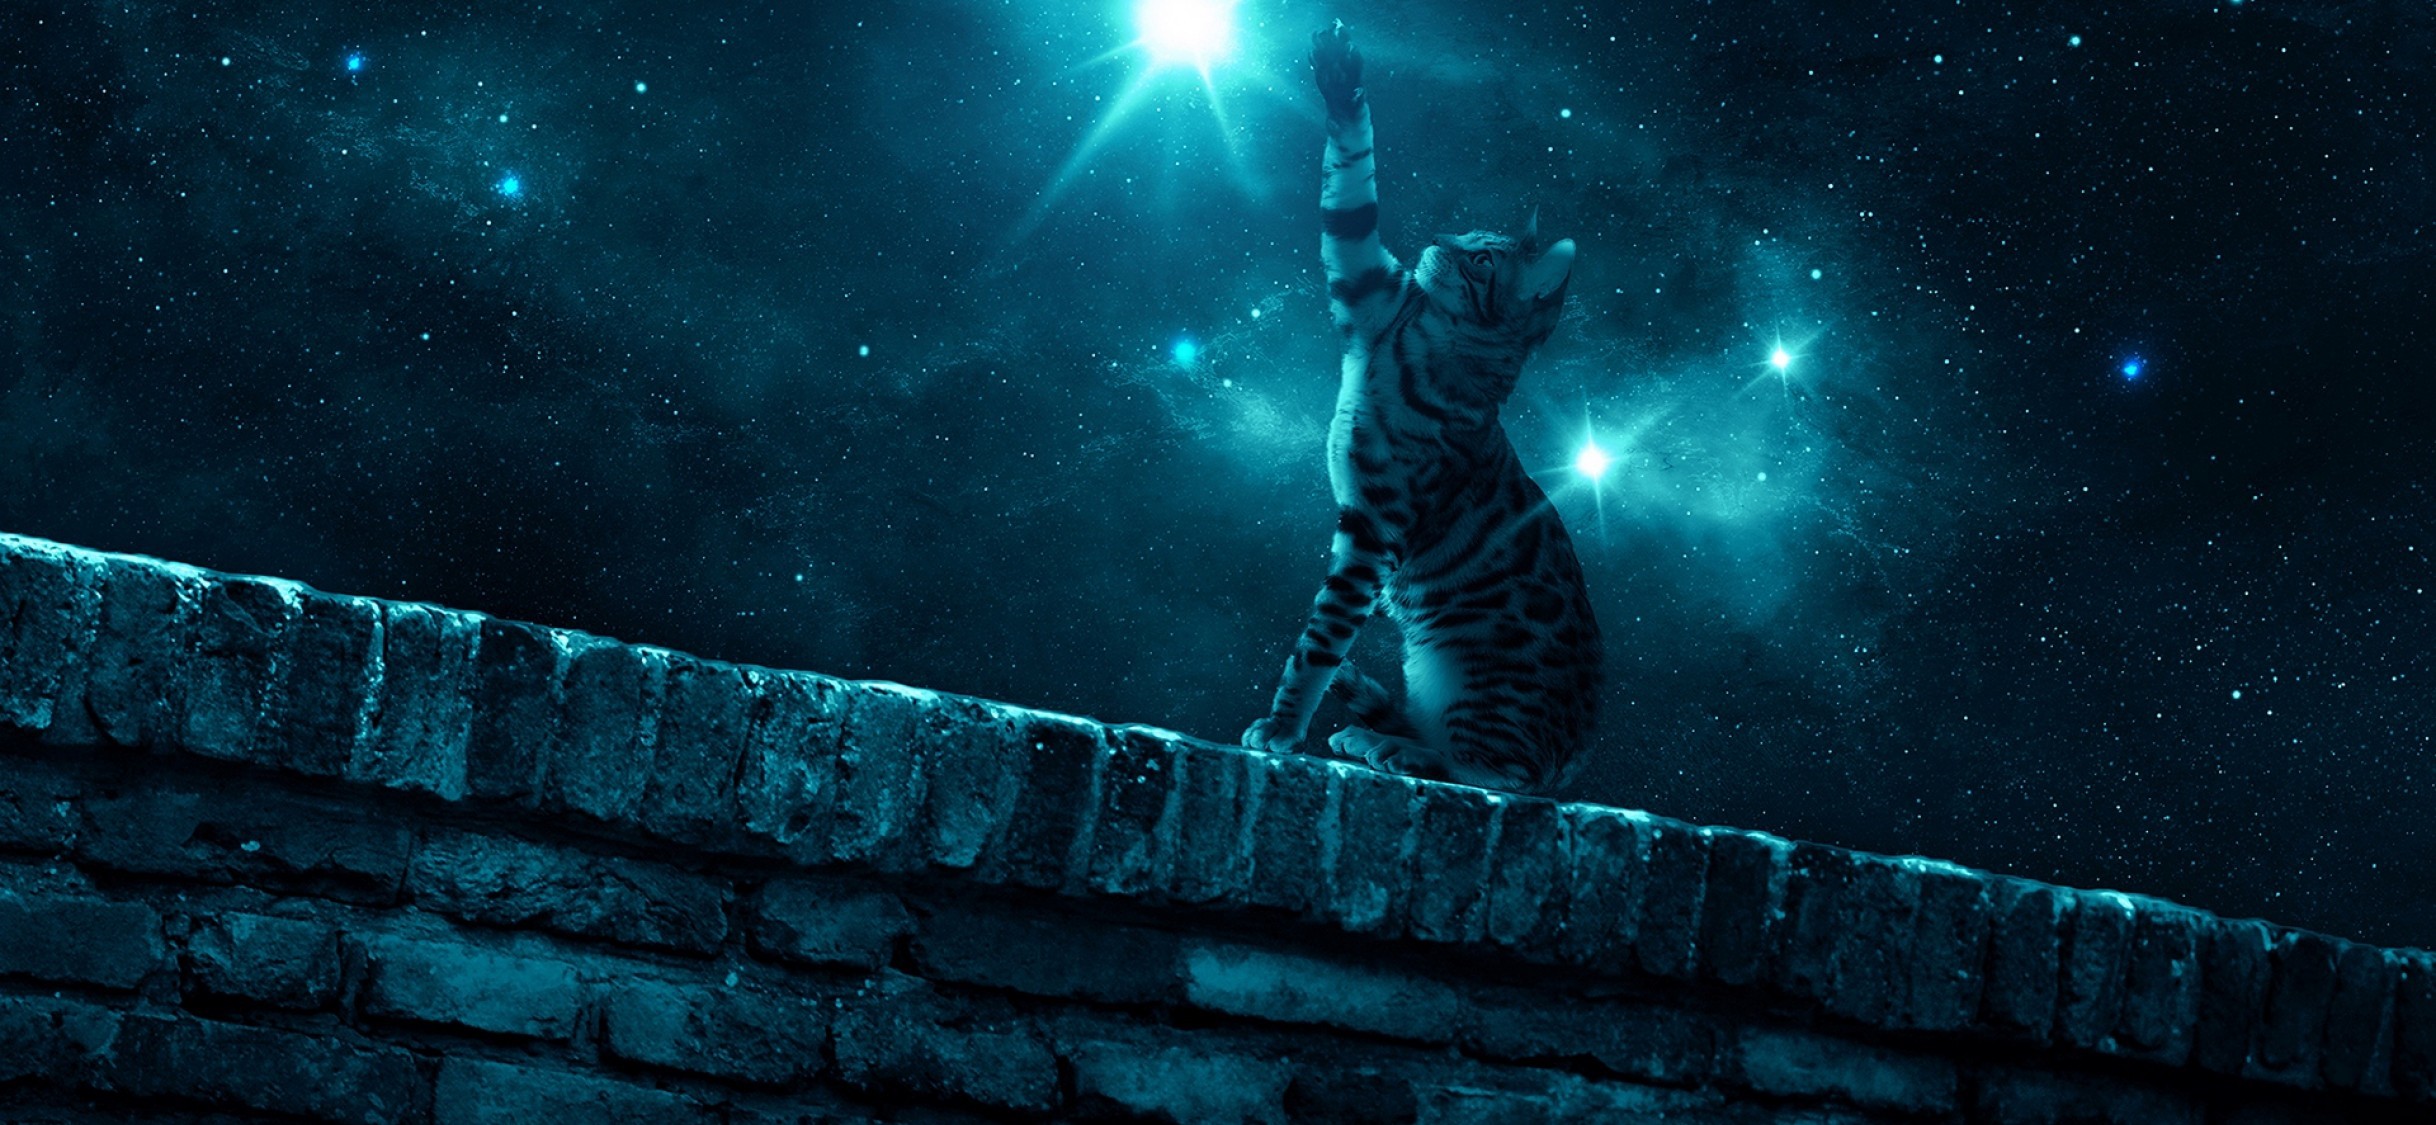 2436x1125 Cat staring sky at night HD Wallpaper - iPhone X